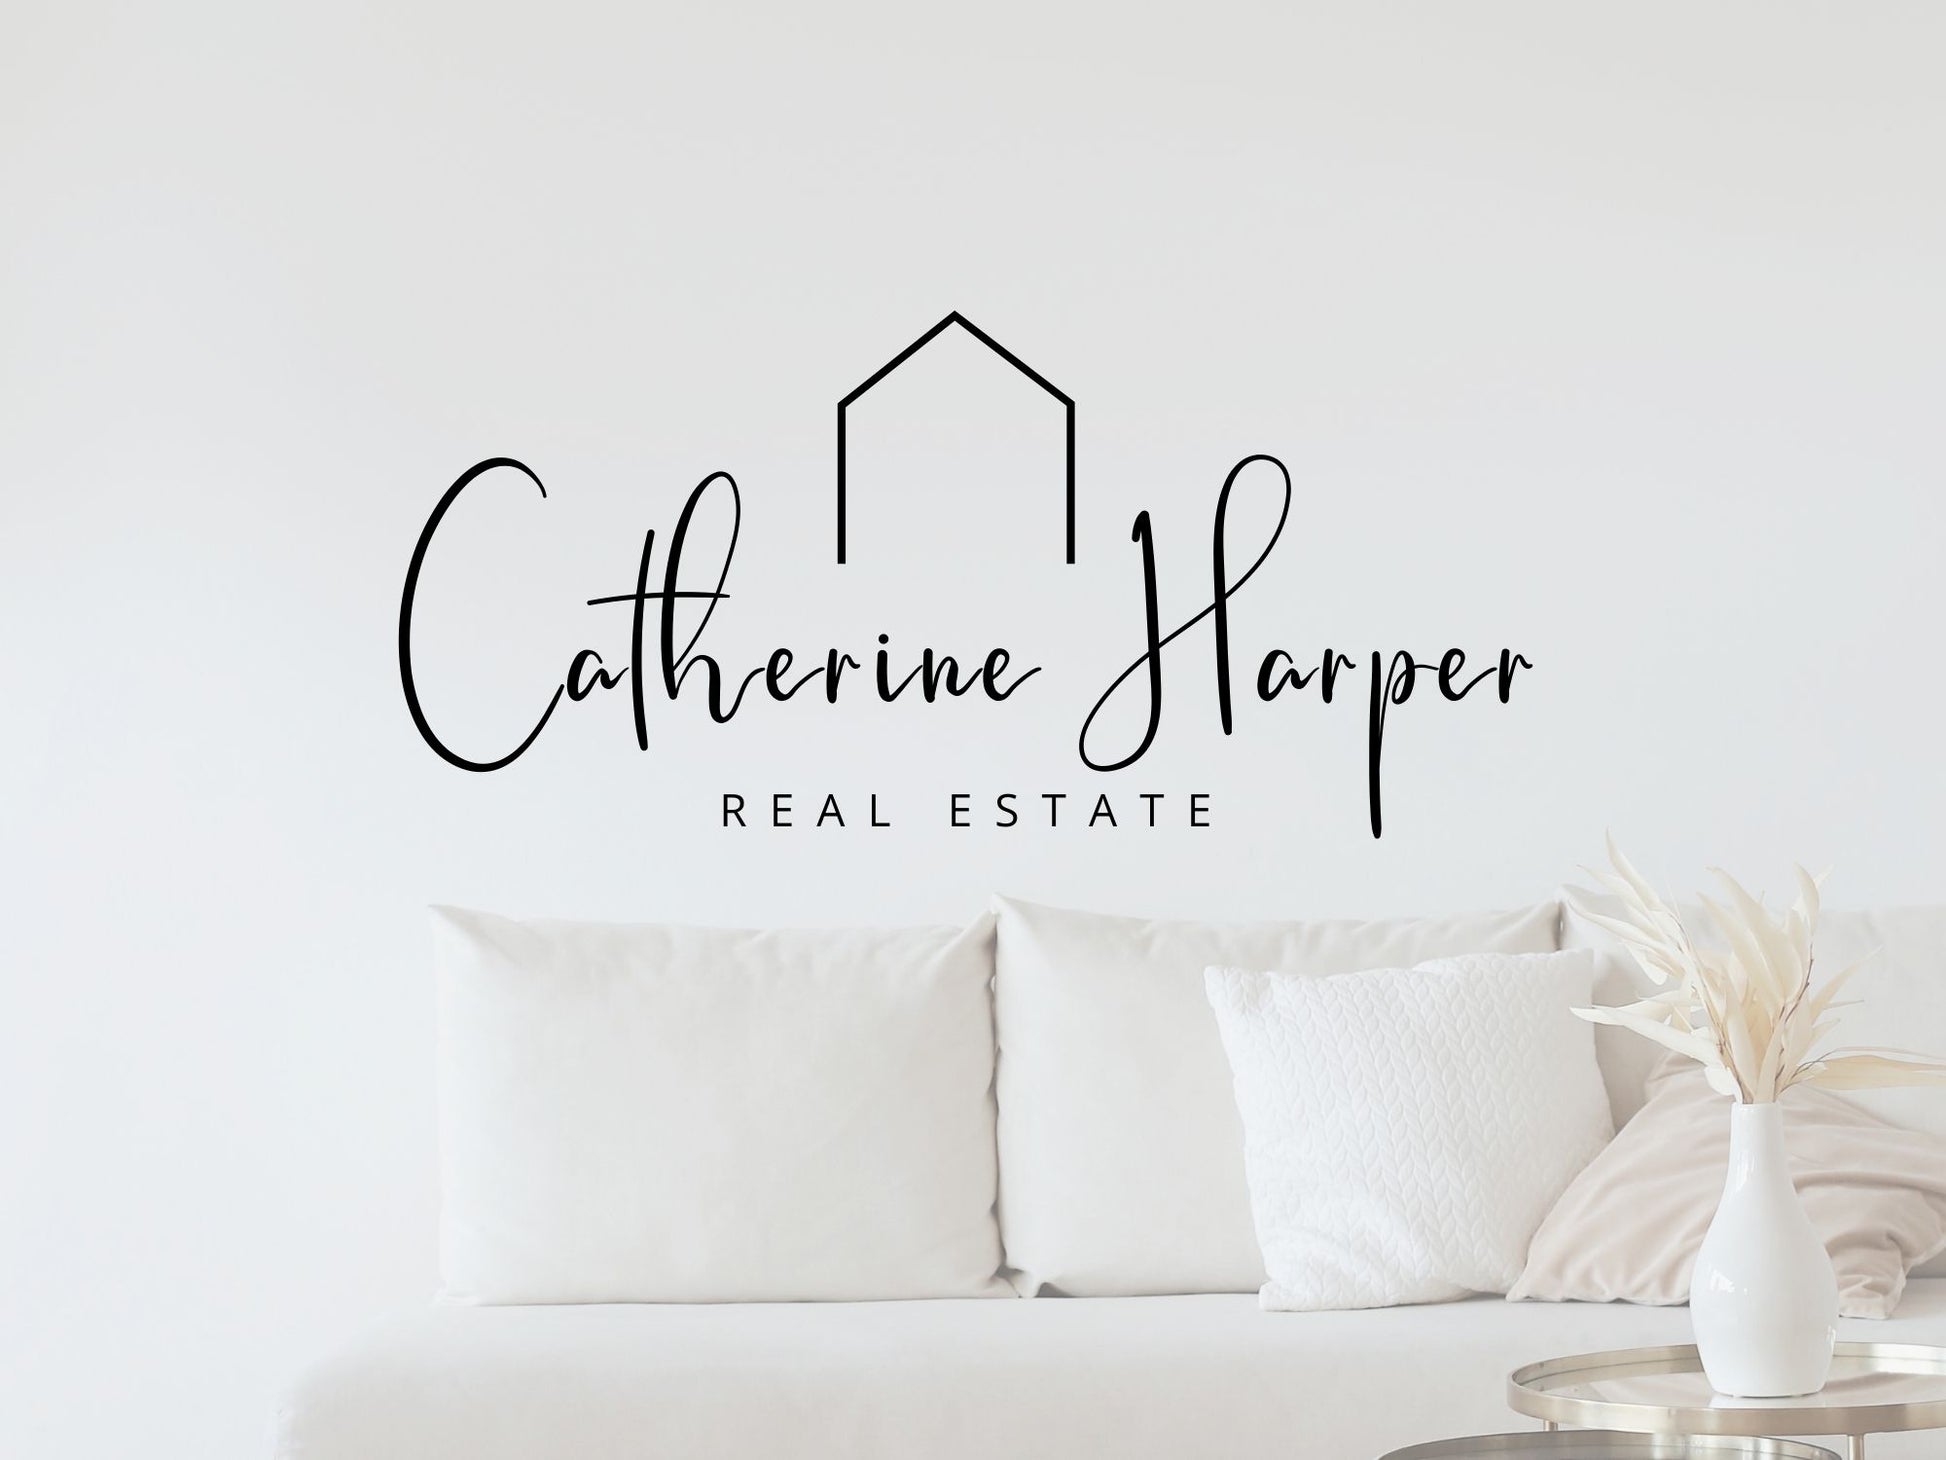 Catherine Harper Black Minimalist Real Estate Logo Template - Sleek and minimal black logo designed for real estate professionals.